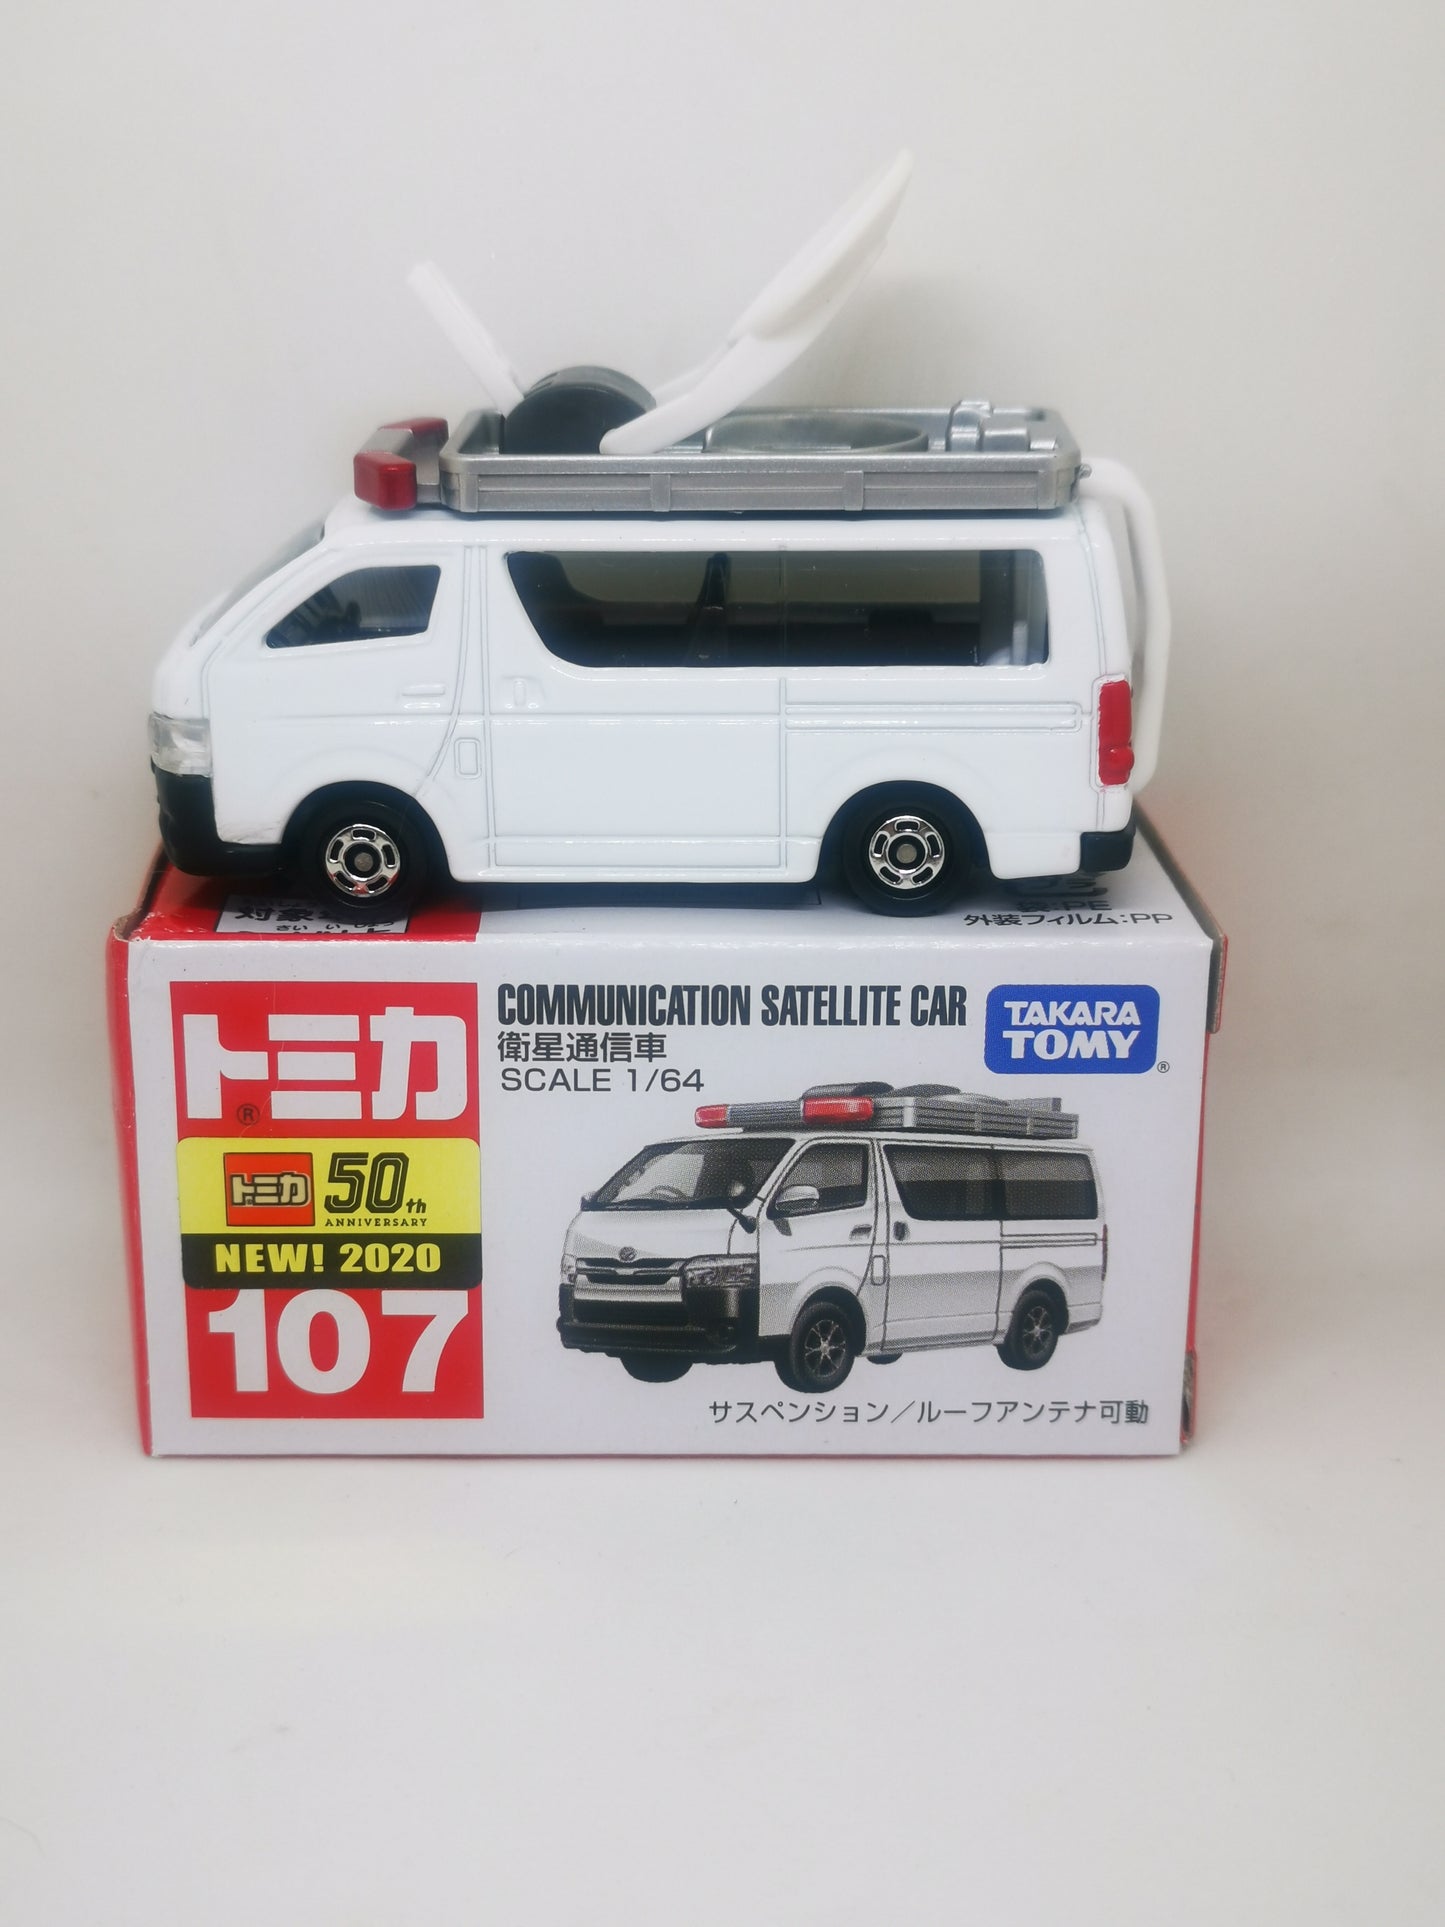 Tomica #107 Toyota Hiace Satellite communication car 1:64 Scale